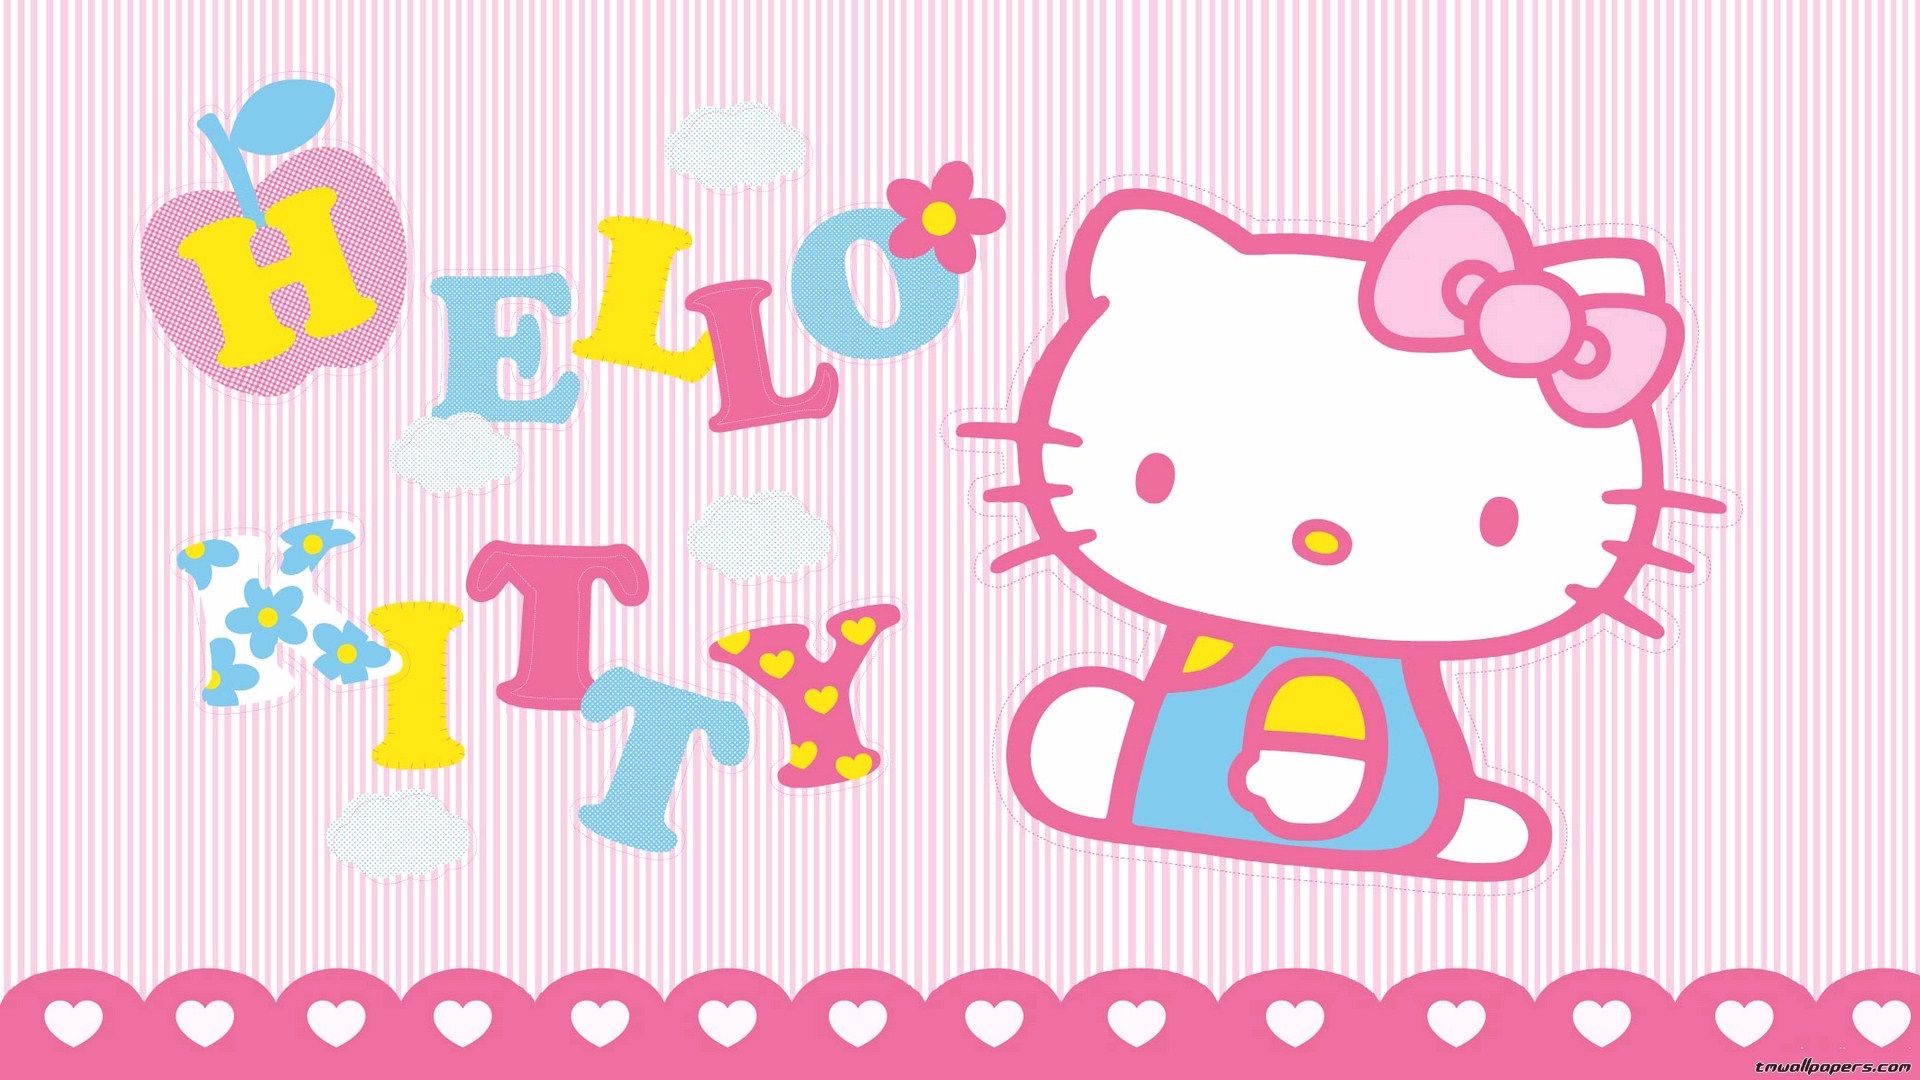 Hello kitty wallpaper for your desktop - Hello Kitty